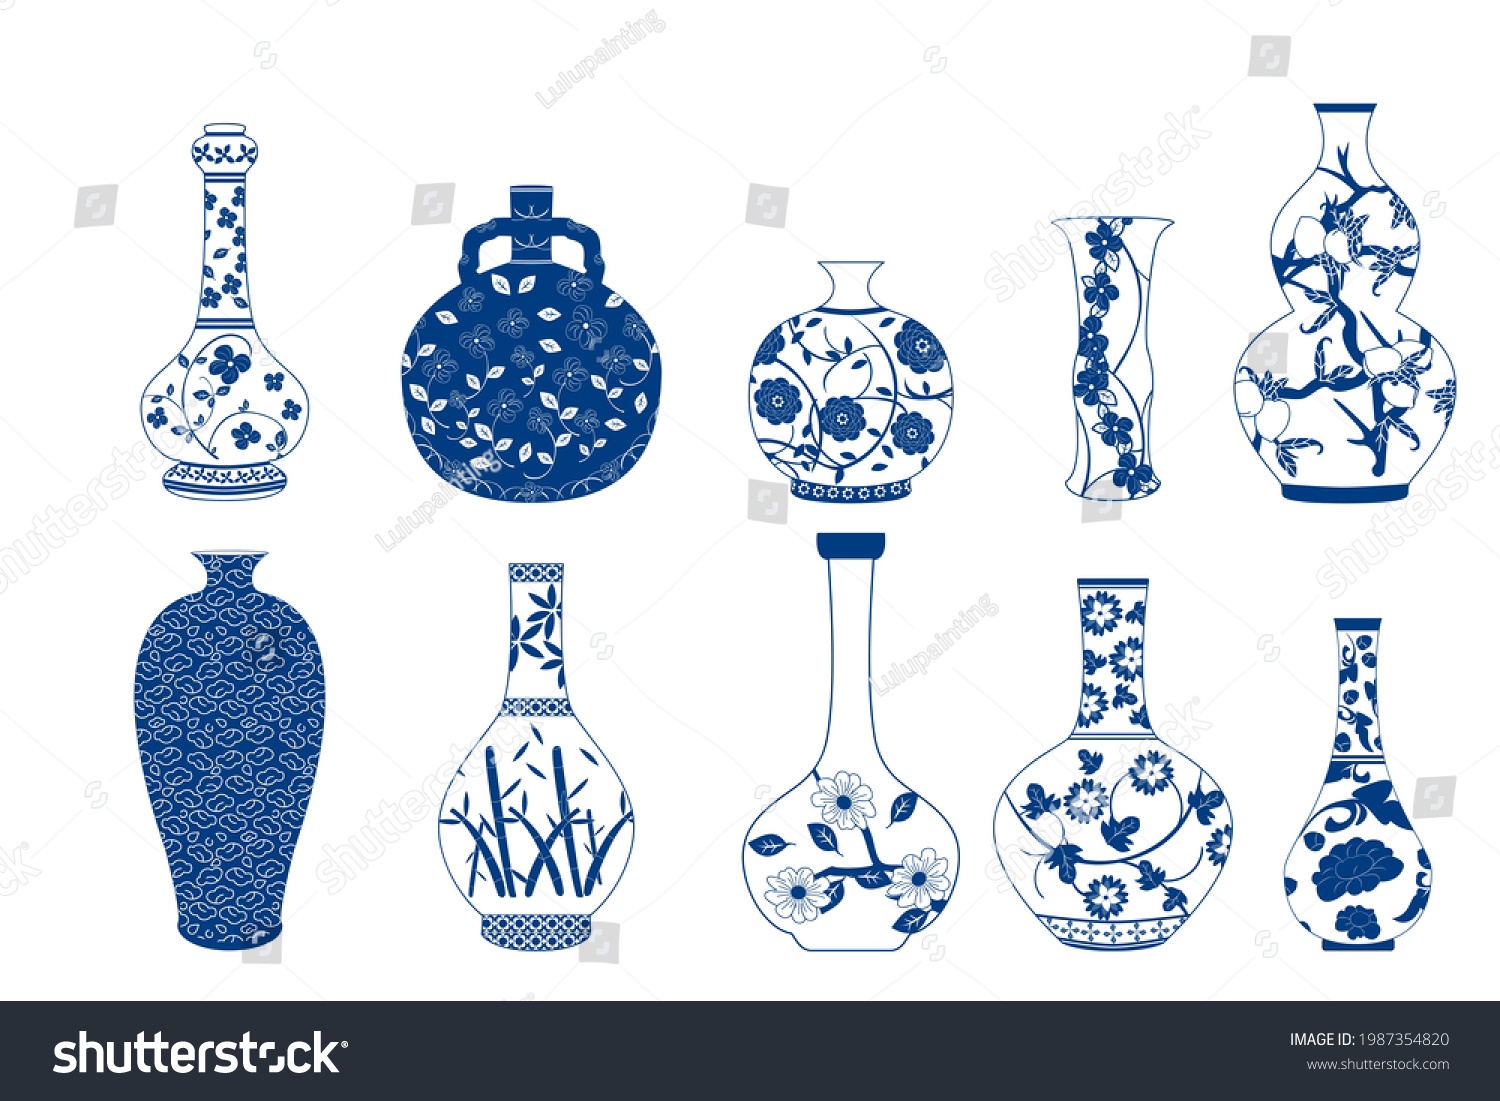 Vase Set. Chinese porcelain vase, ceramic vase, antique blue and white pottery vase with landscape painting. Oriental decorative elements collection of vases for your interior design. #1987354820